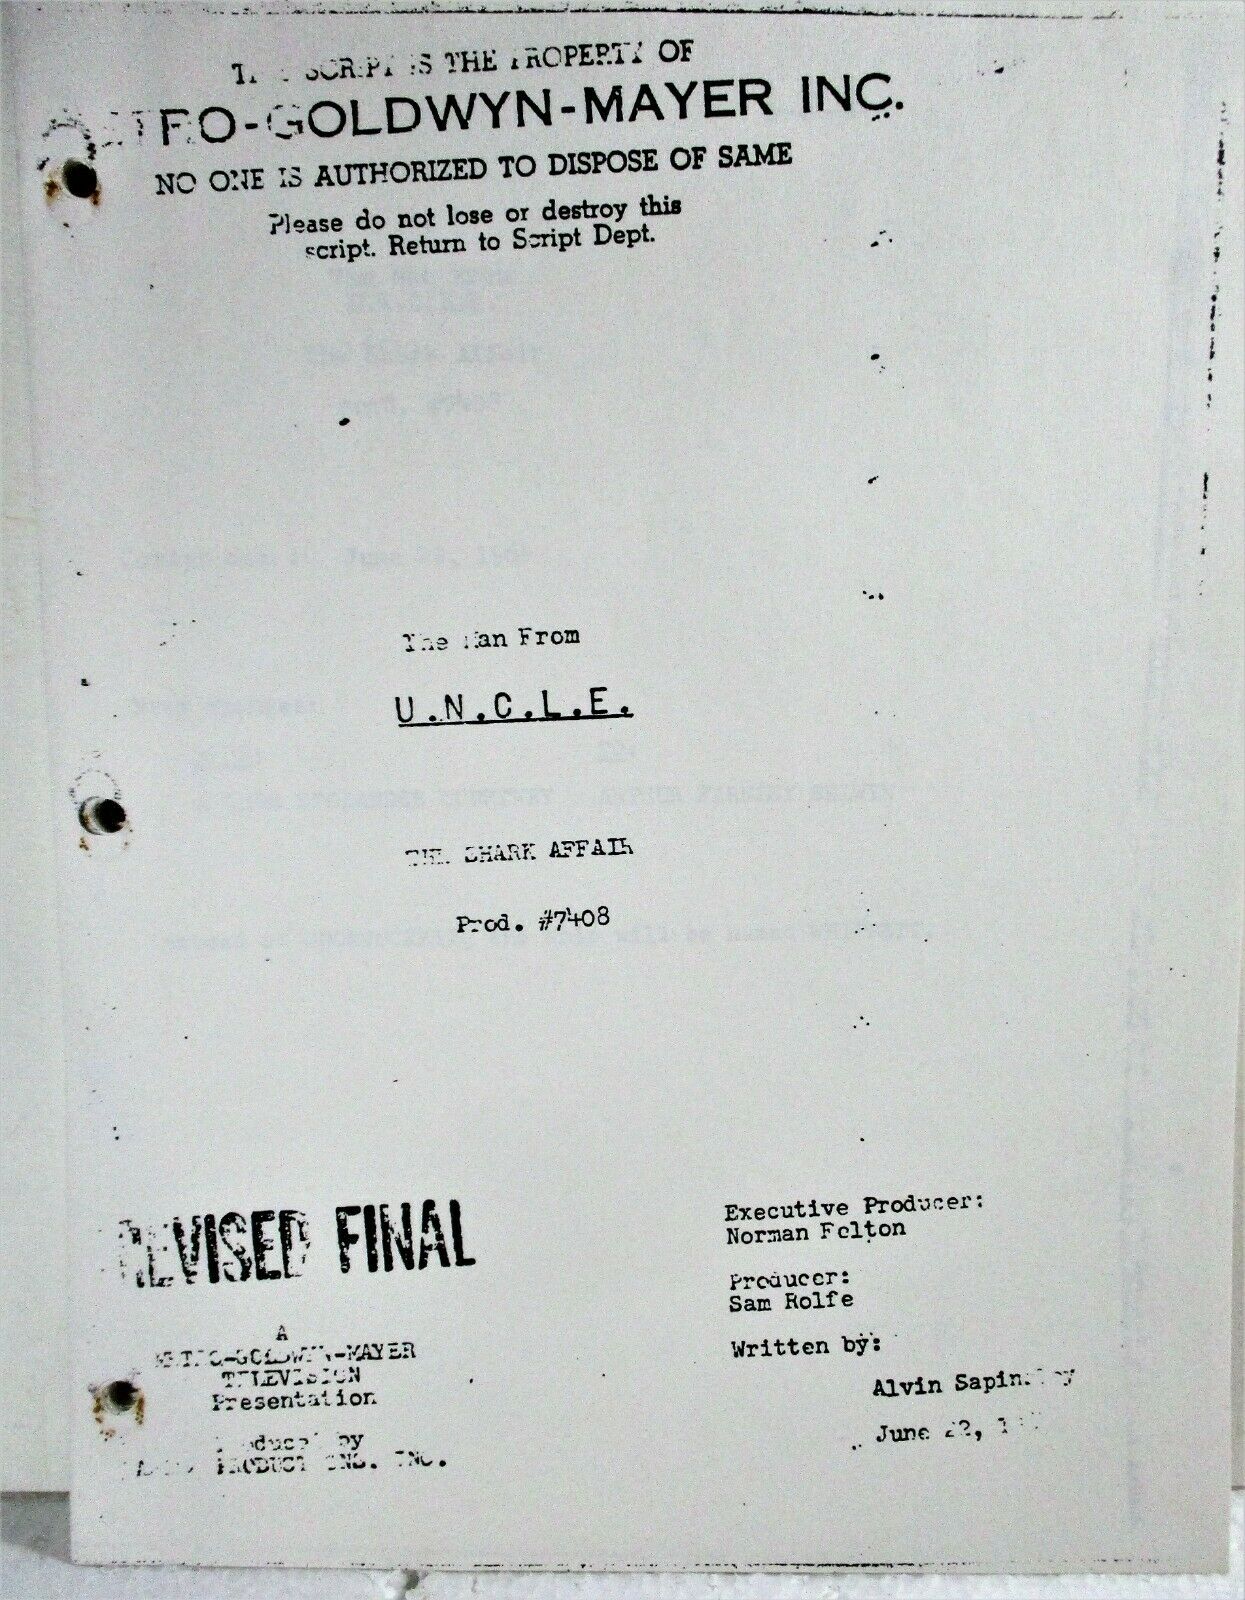 Man From U.n.c.l.e Script "the Shark Affair" June 22, 1964